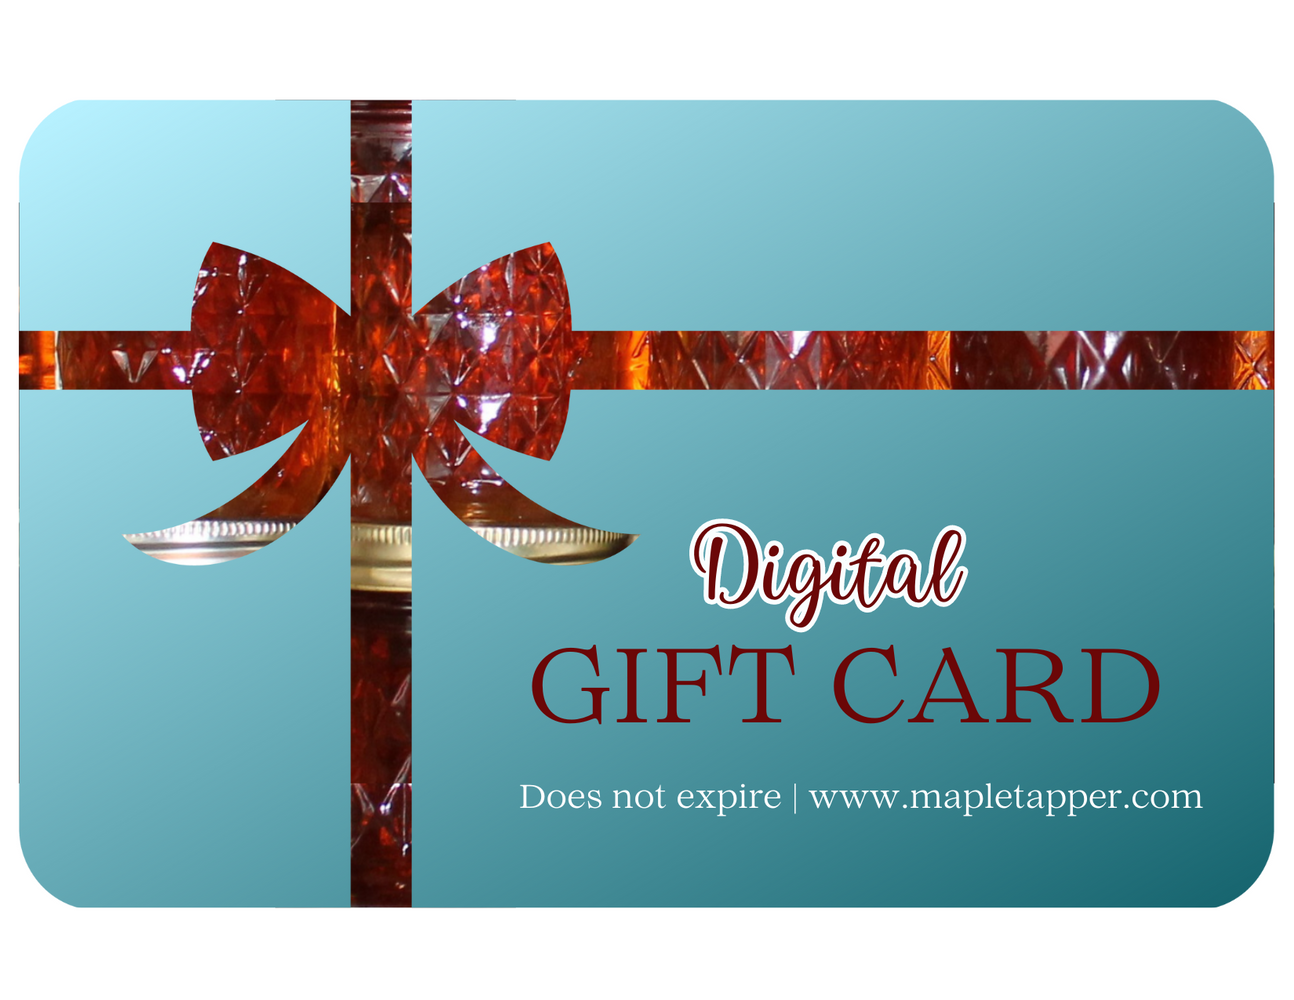 Maple Tapper Gift Card